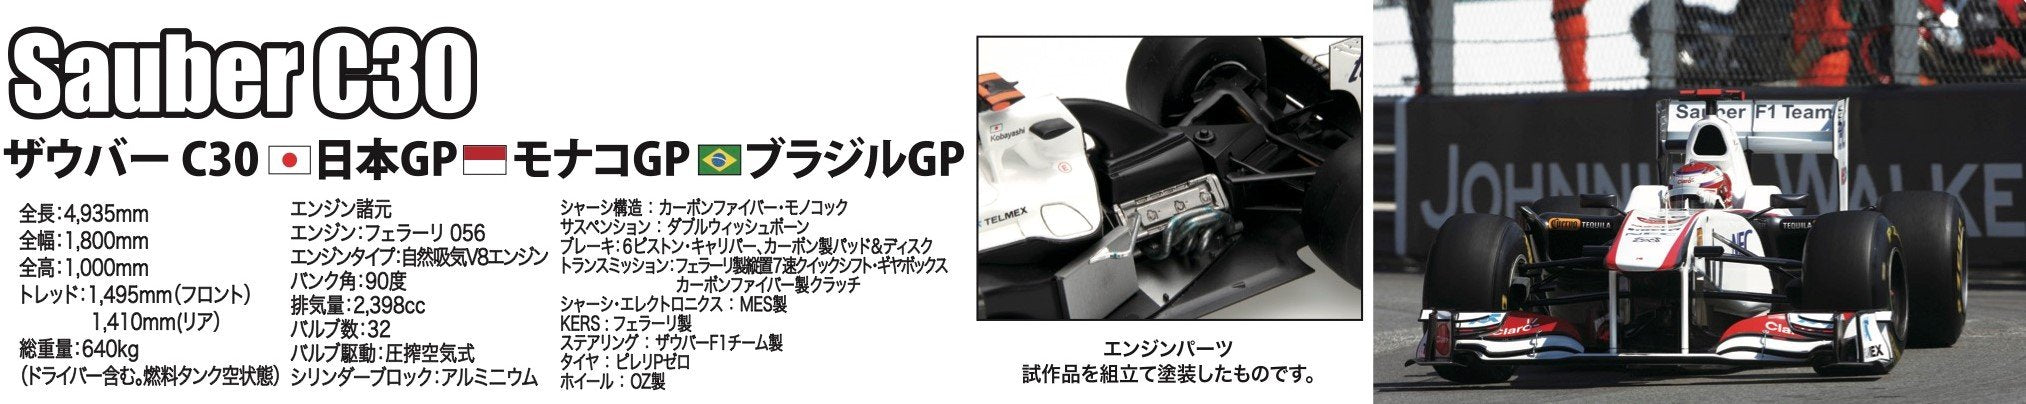 Fujimi Gp22 092089 Sauber C30 (Japan / Monaco / Brasilien Gp) 1/20 Japanische Maßstab Rennwagen